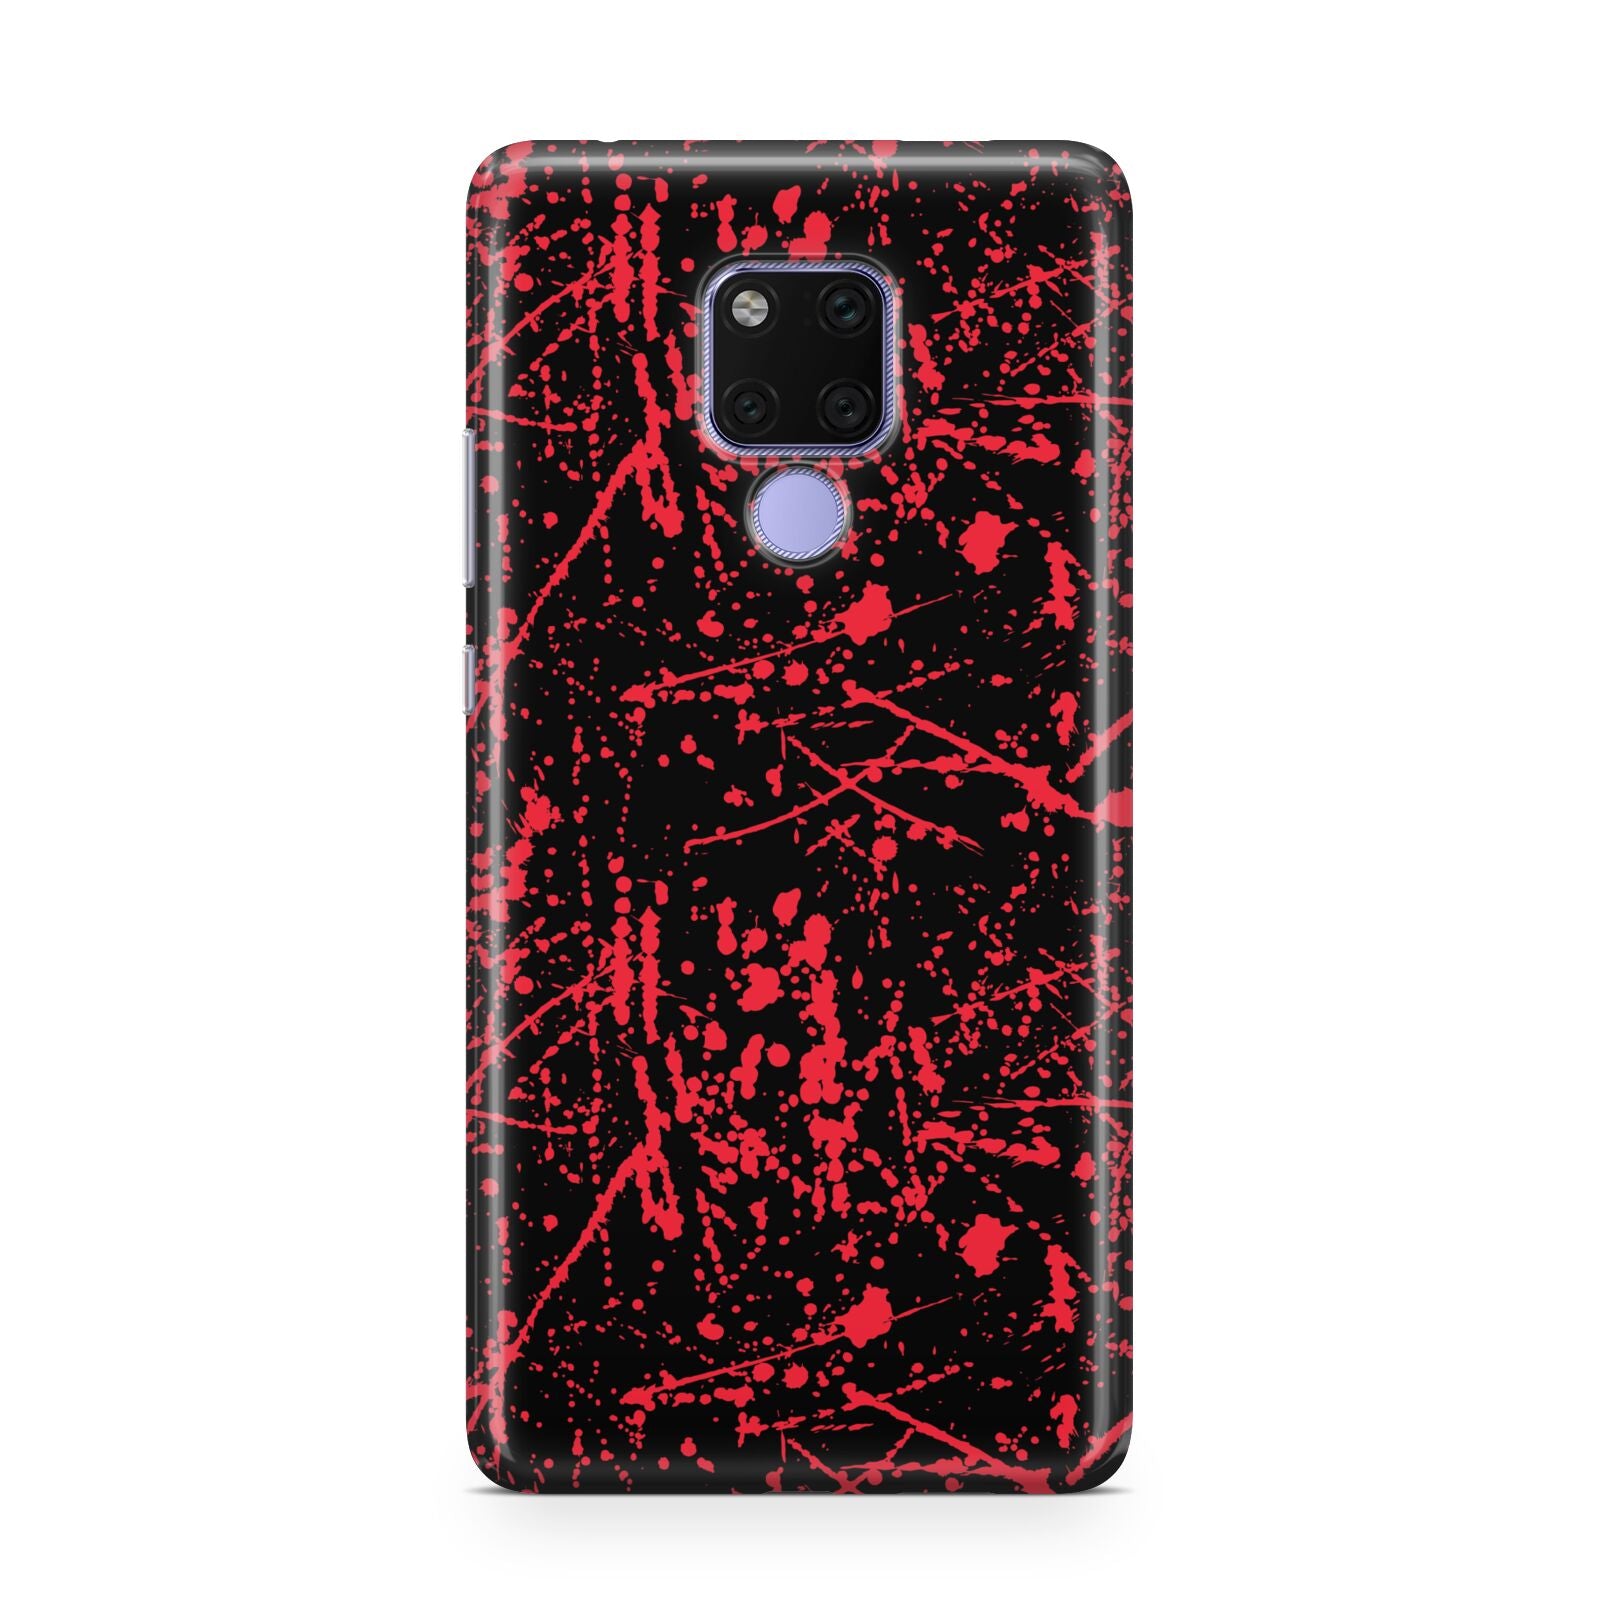 Blood Splatters Huawei Mate 20X Phone Case